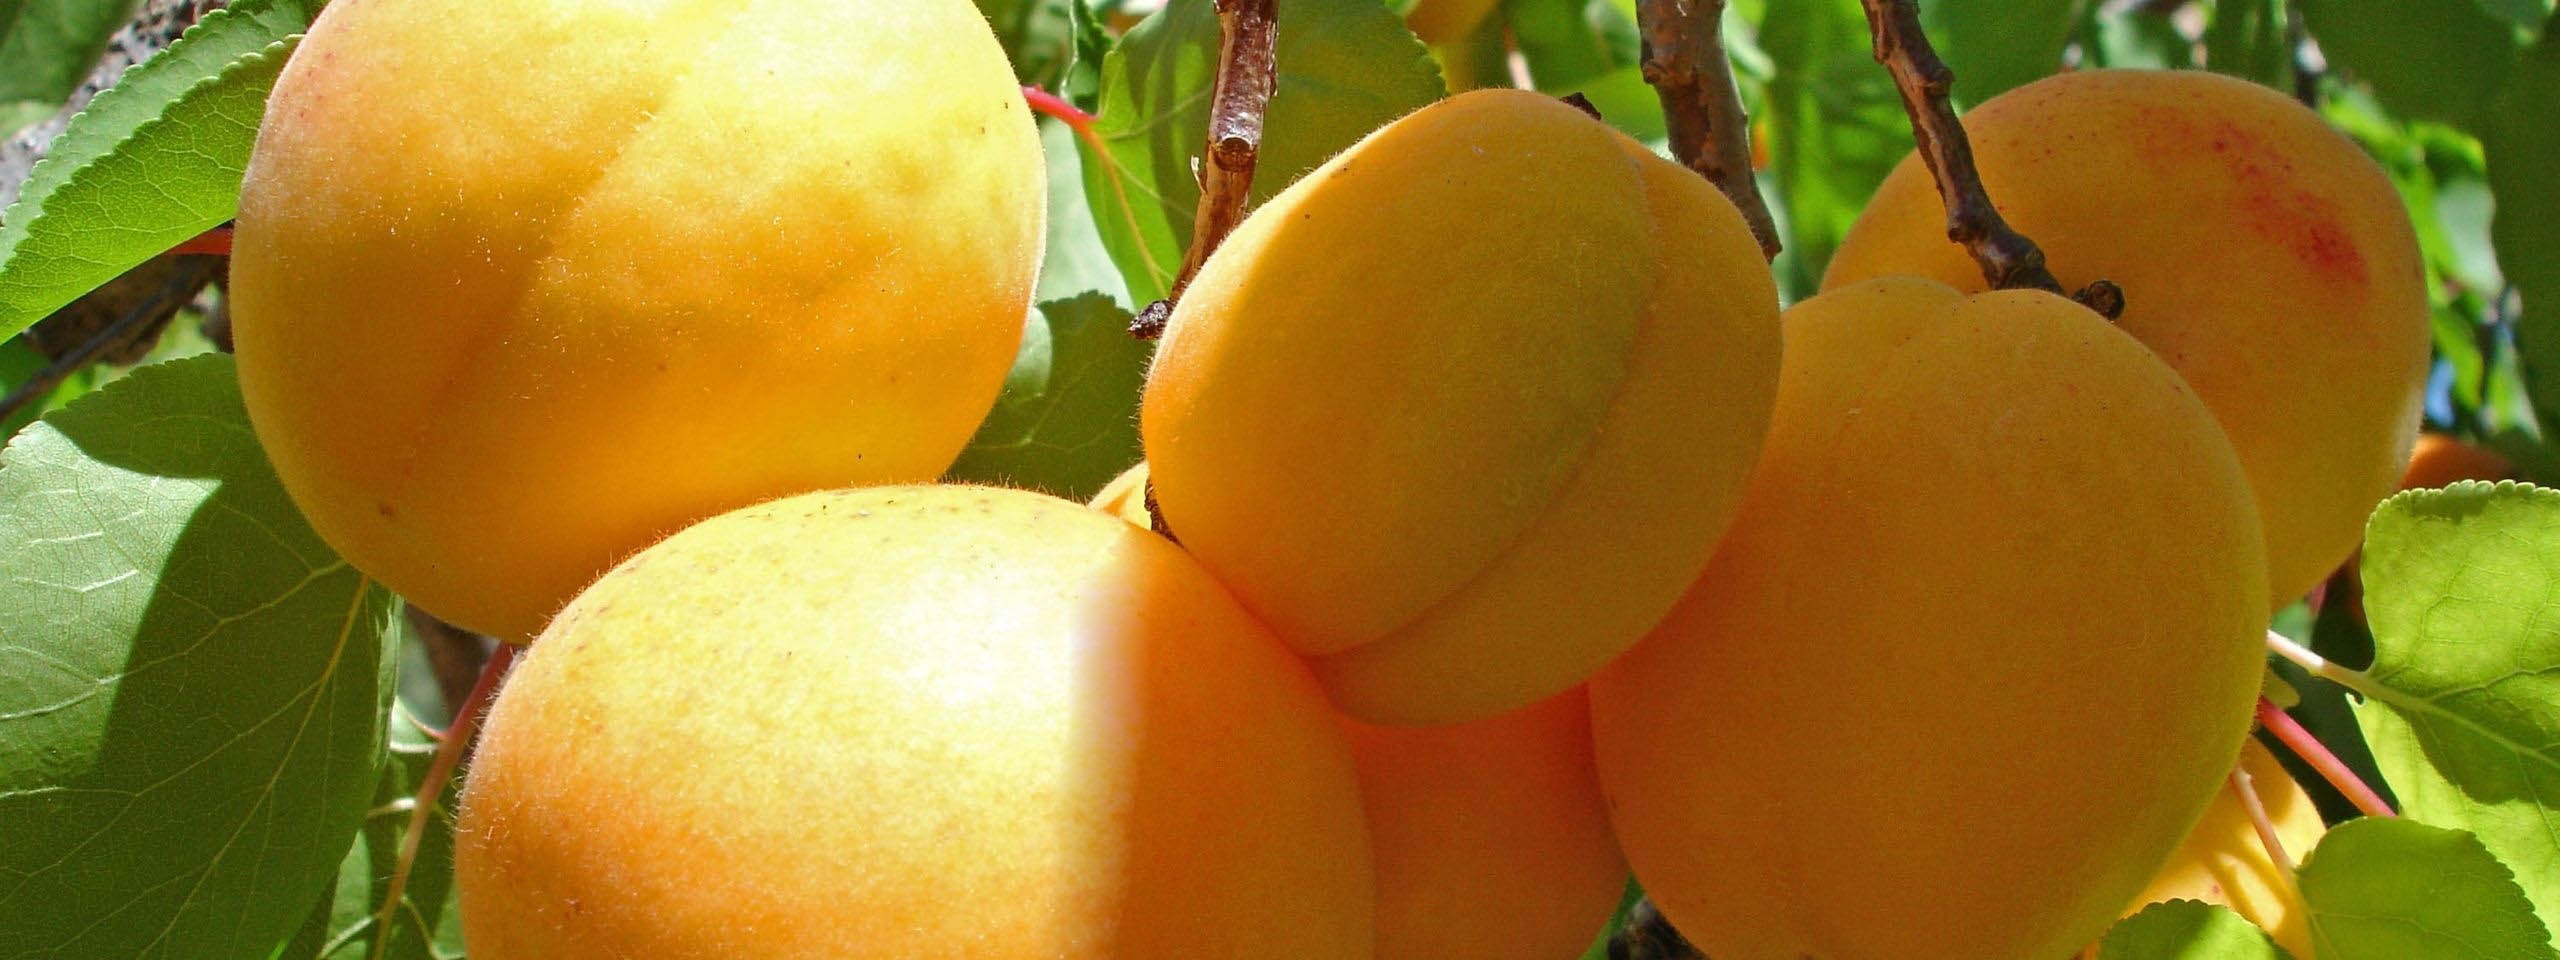 Apricot Fruits